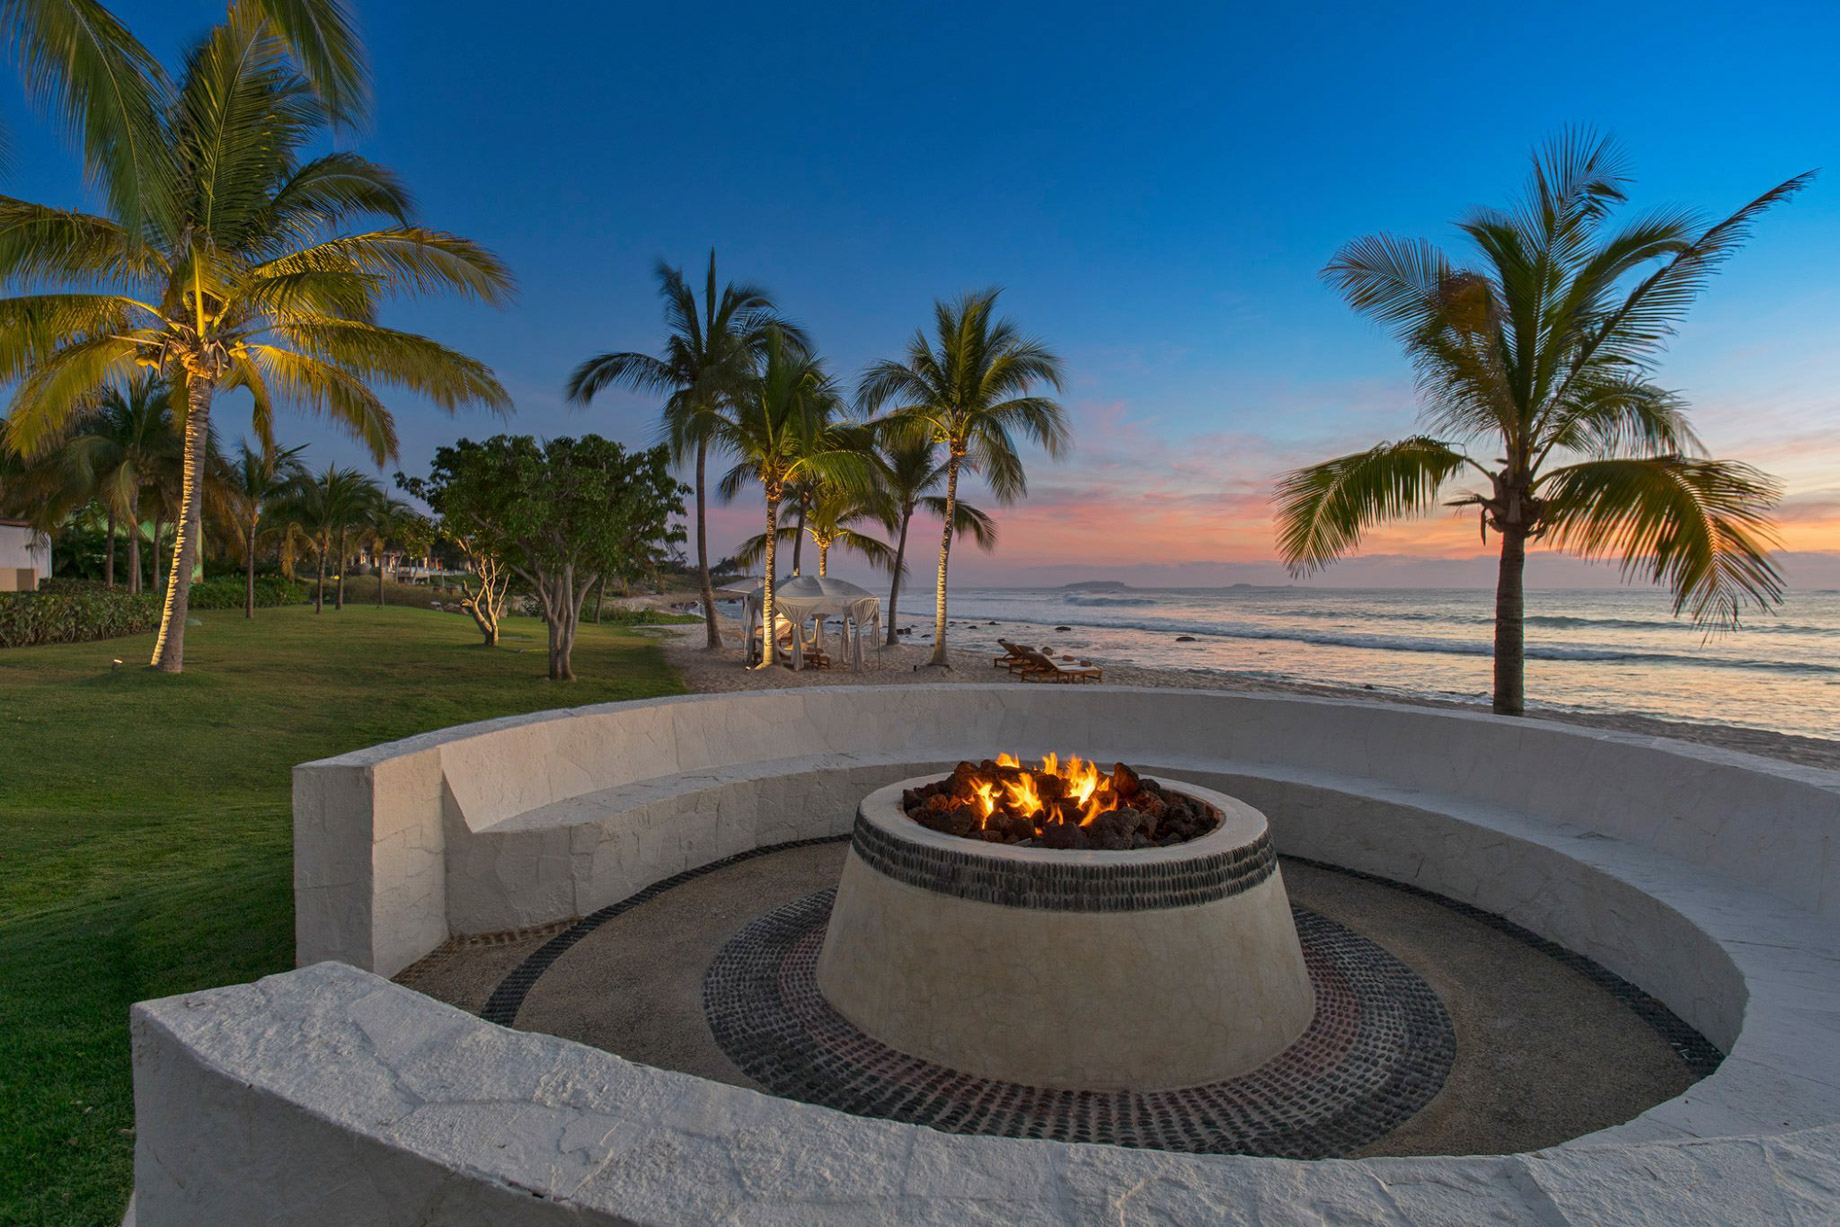 The St. Regis Punta Mita Resort - Nayarit, Mexico - Beach Firepit Sunset